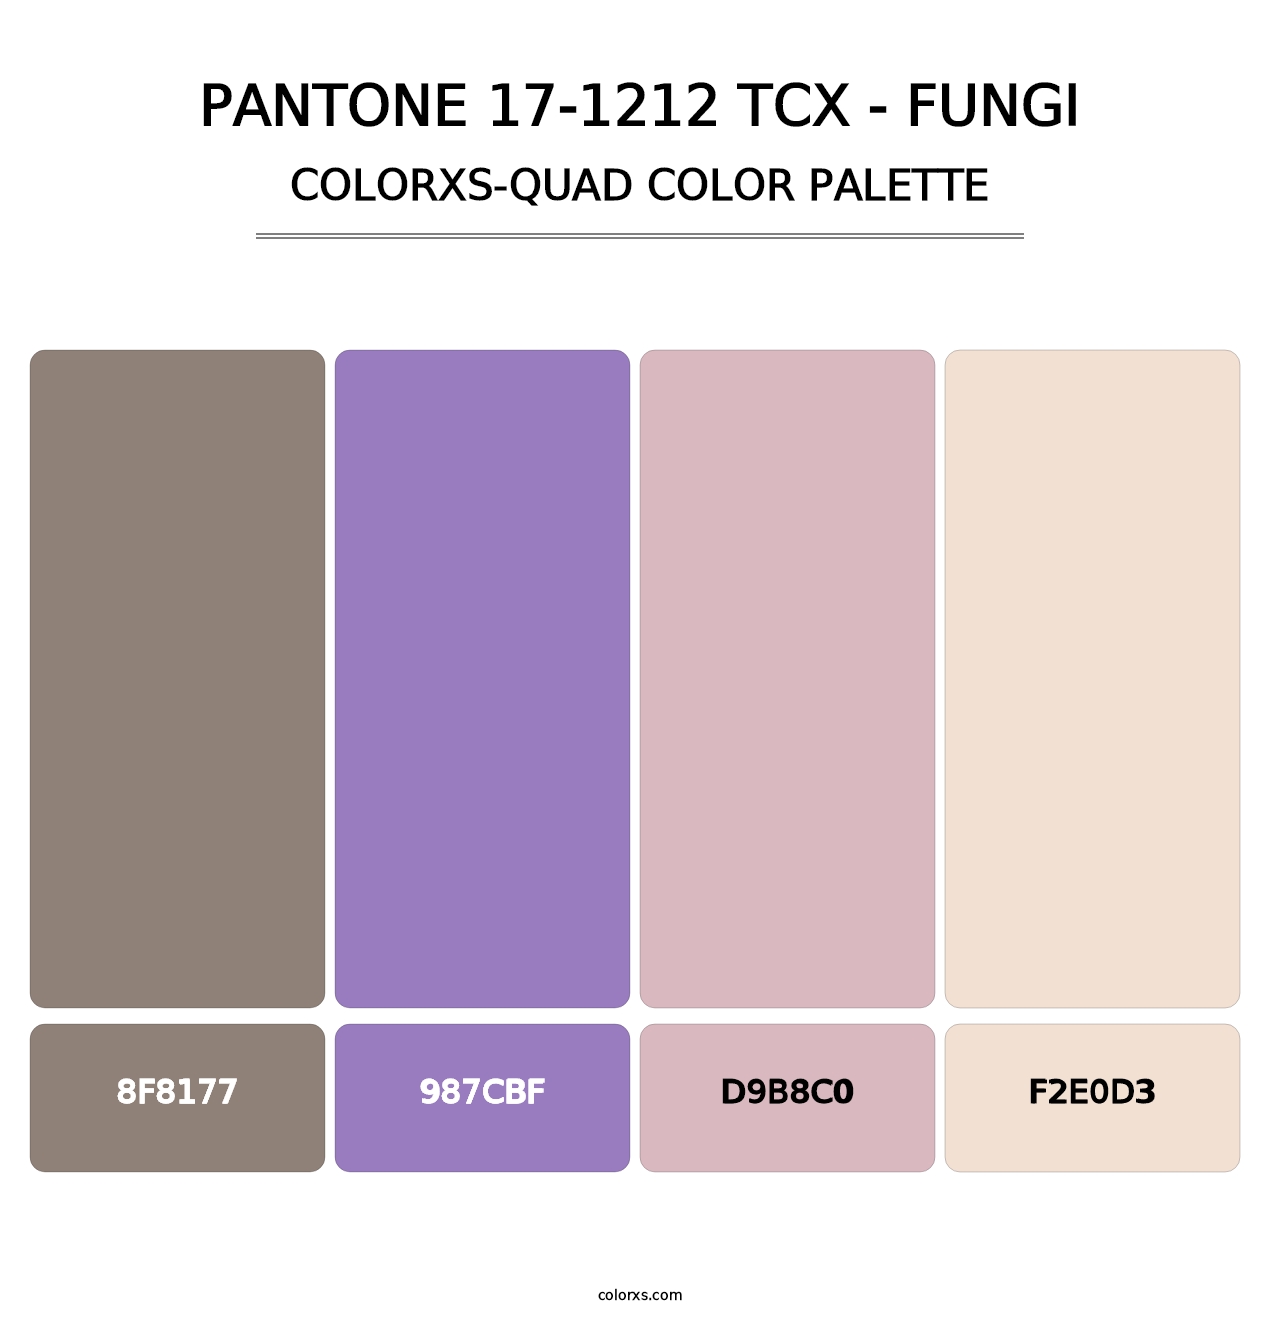 PANTONE 17-1212 TCX - Fungi - Colorxs Quad Palette